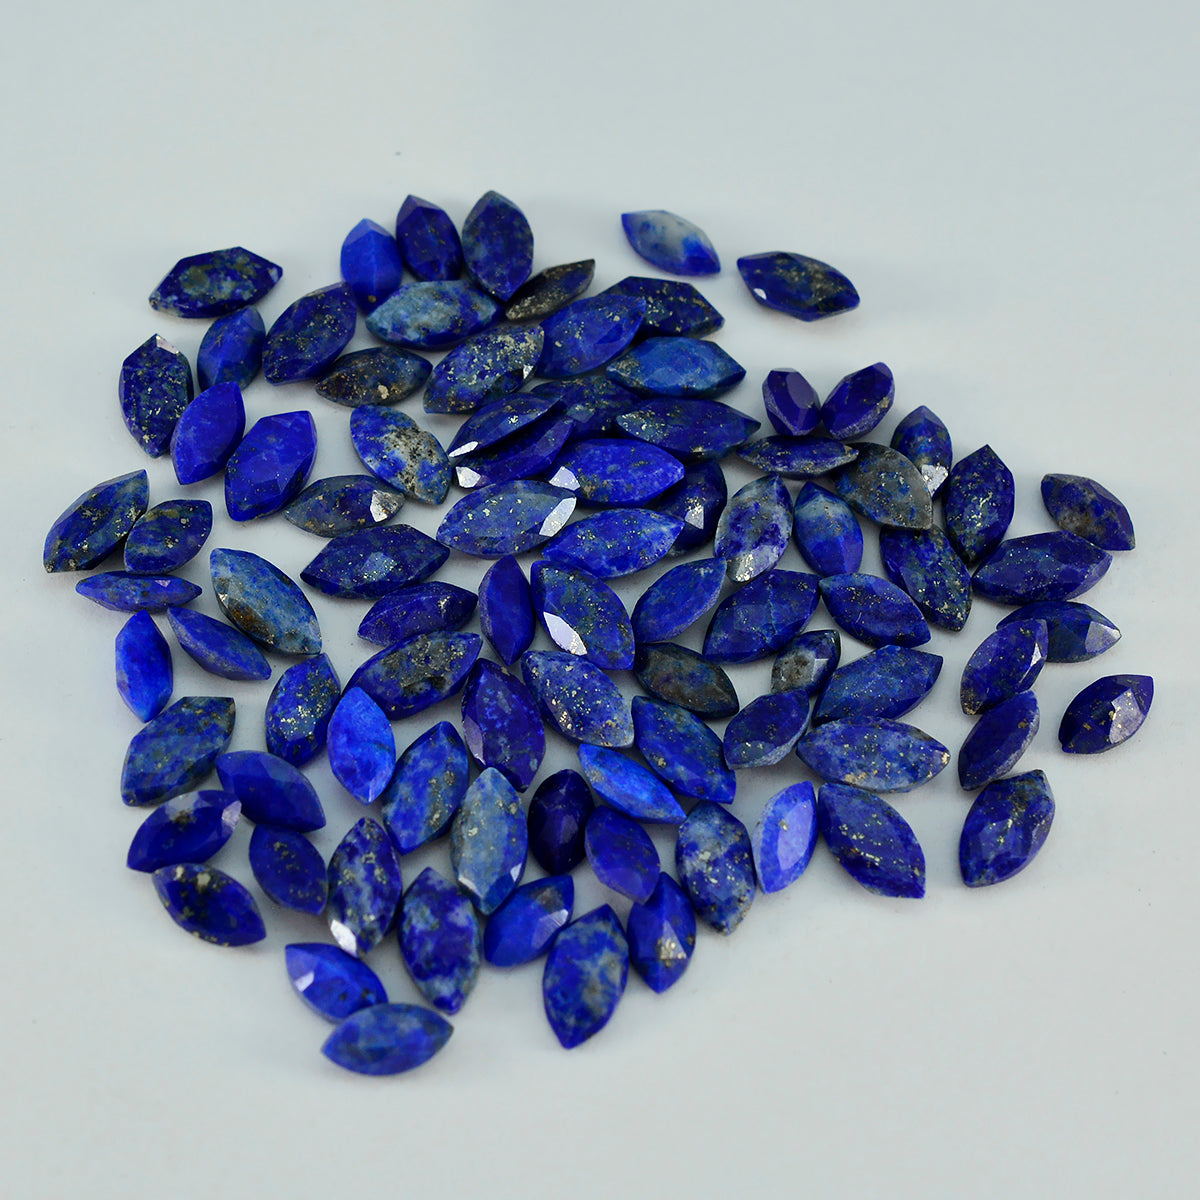 Riyogems 1PC Natural Blue Lapis Lazuli Faceted 2x4 mm Marquise Shape cute Quality Loose Gems